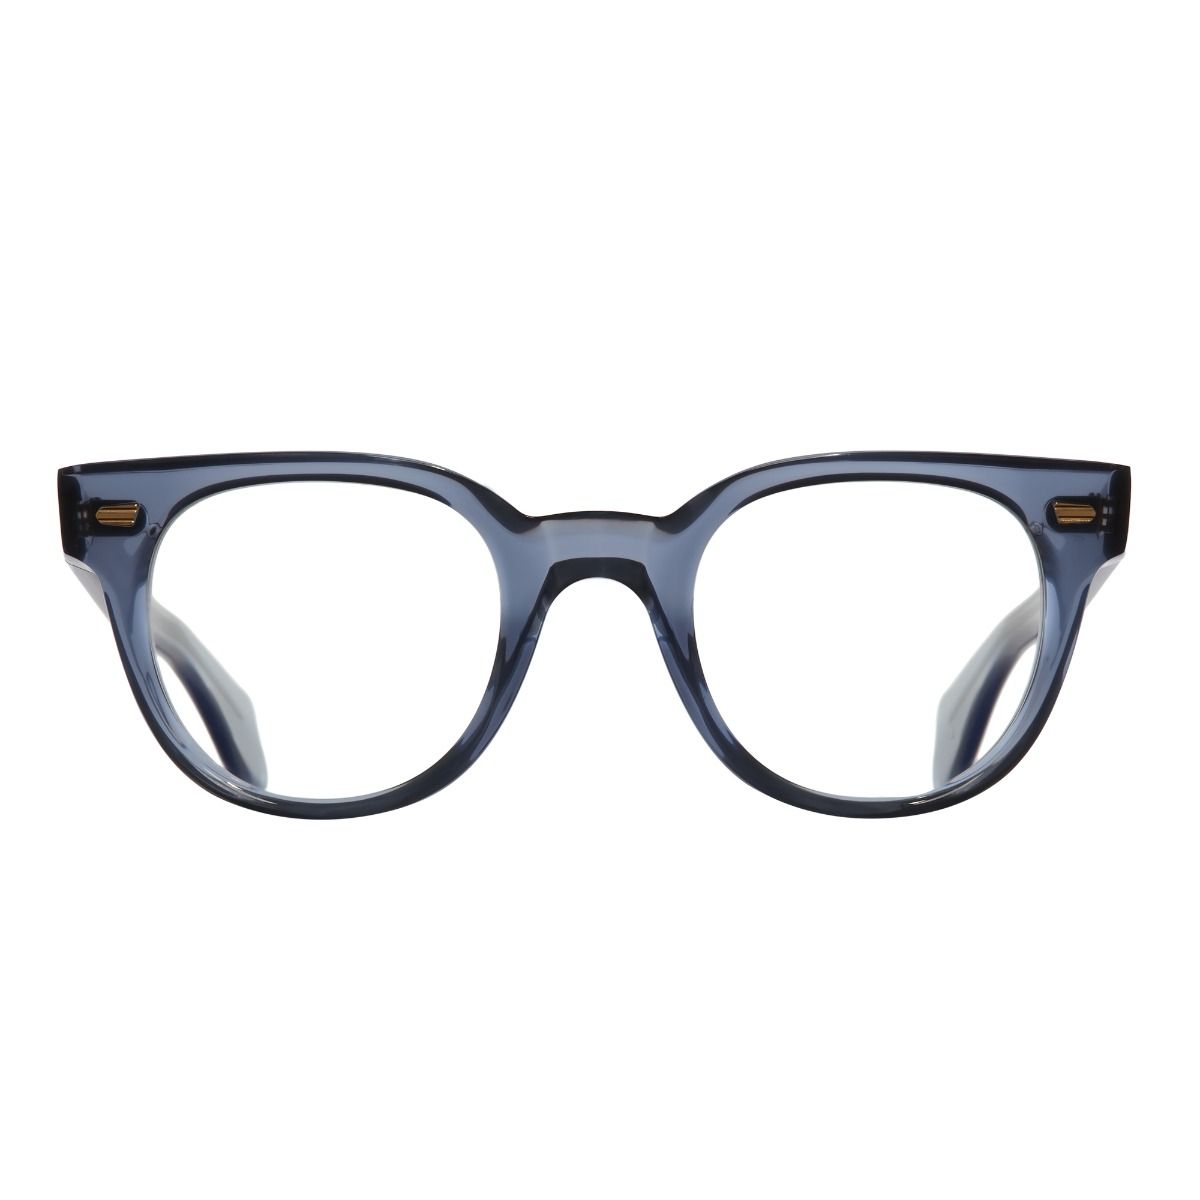 Cutler and Gross Glasses | David Shanahan Optometrists